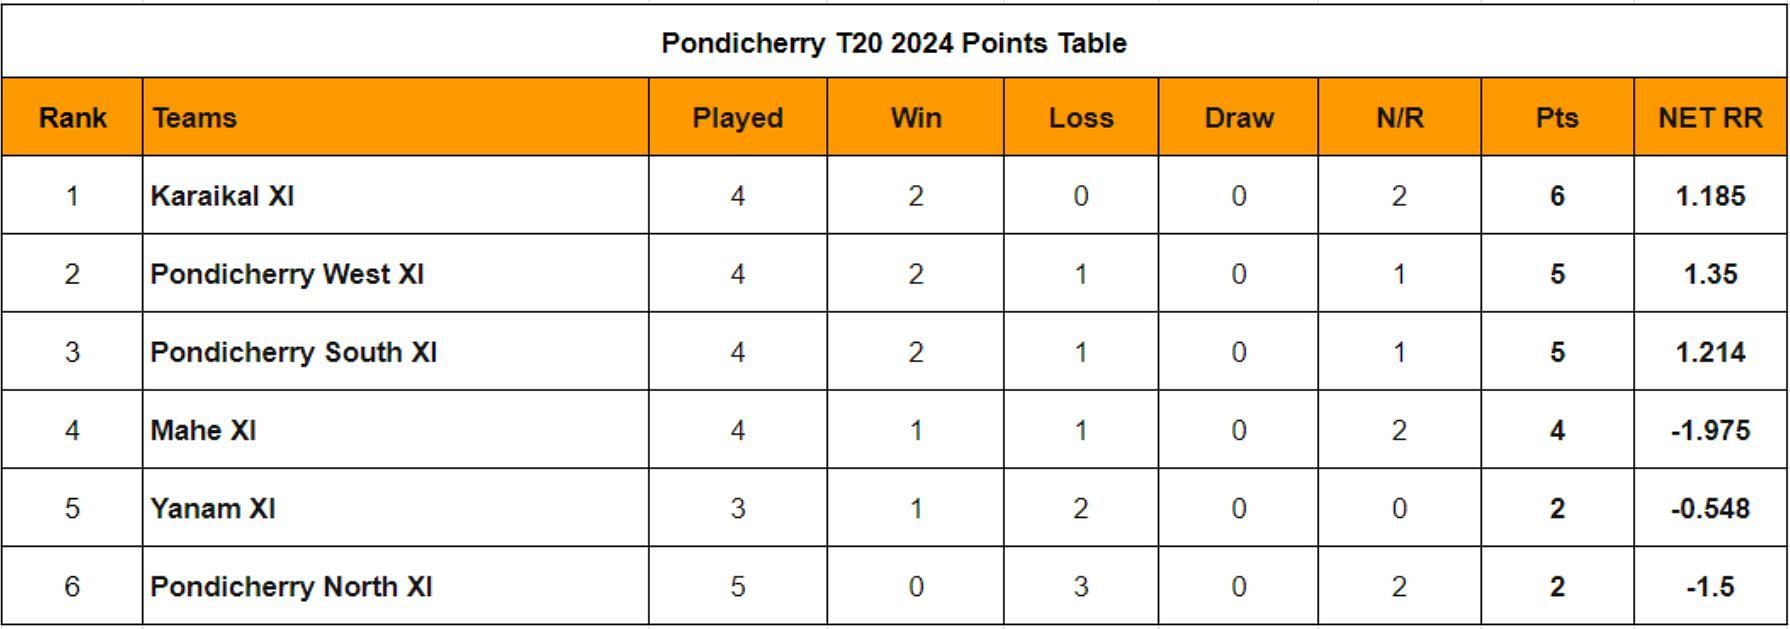 Pondicherry T20 2024 Points Table